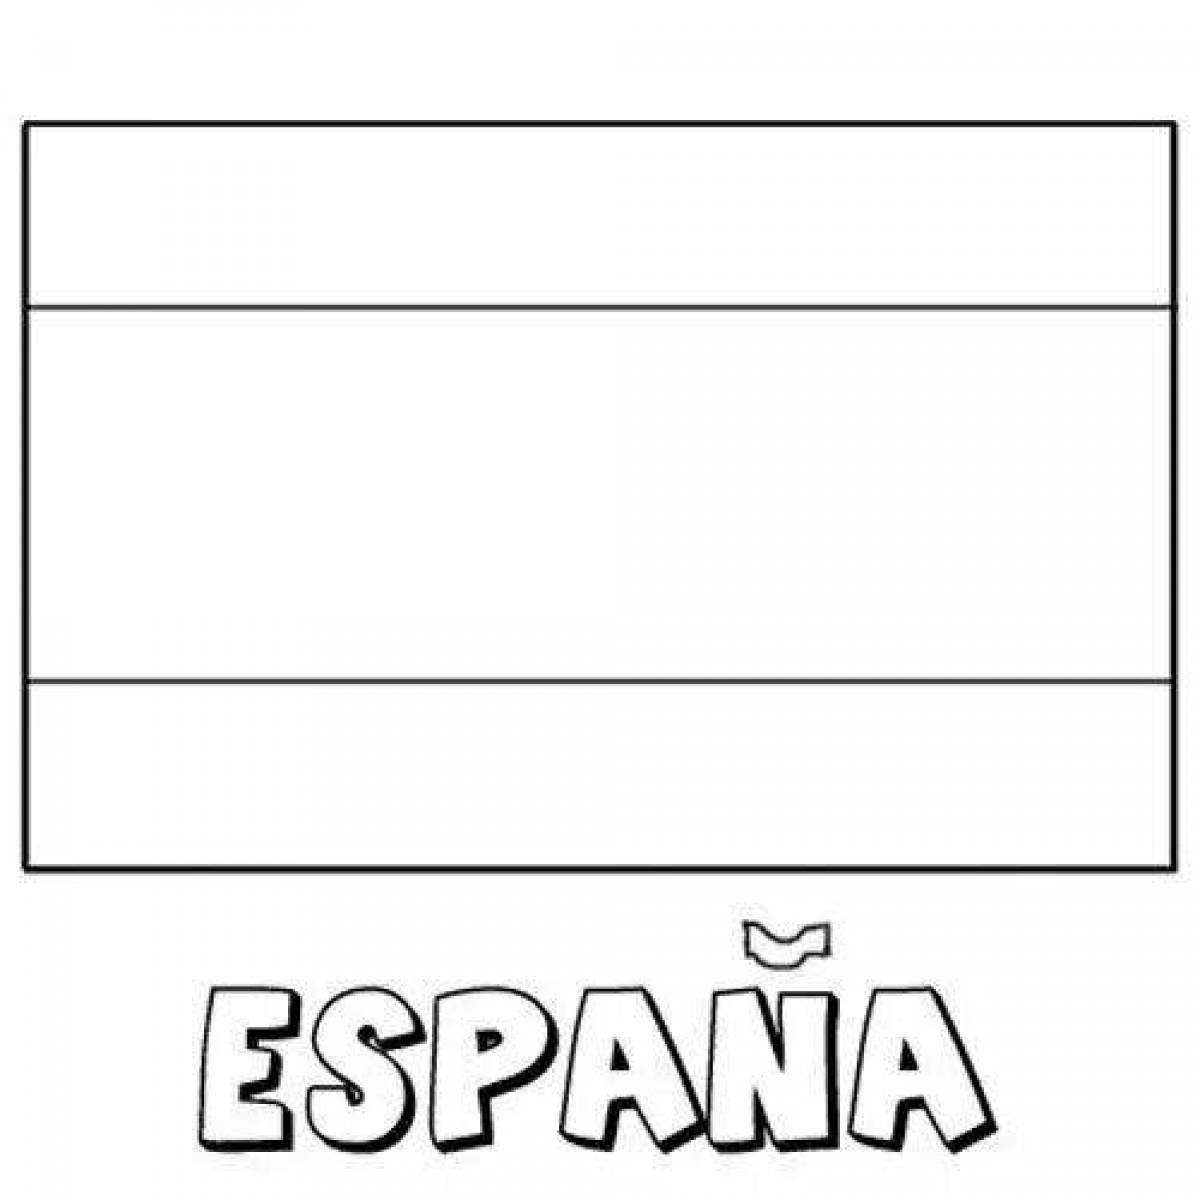 Драматическая страница раскраски флага испании